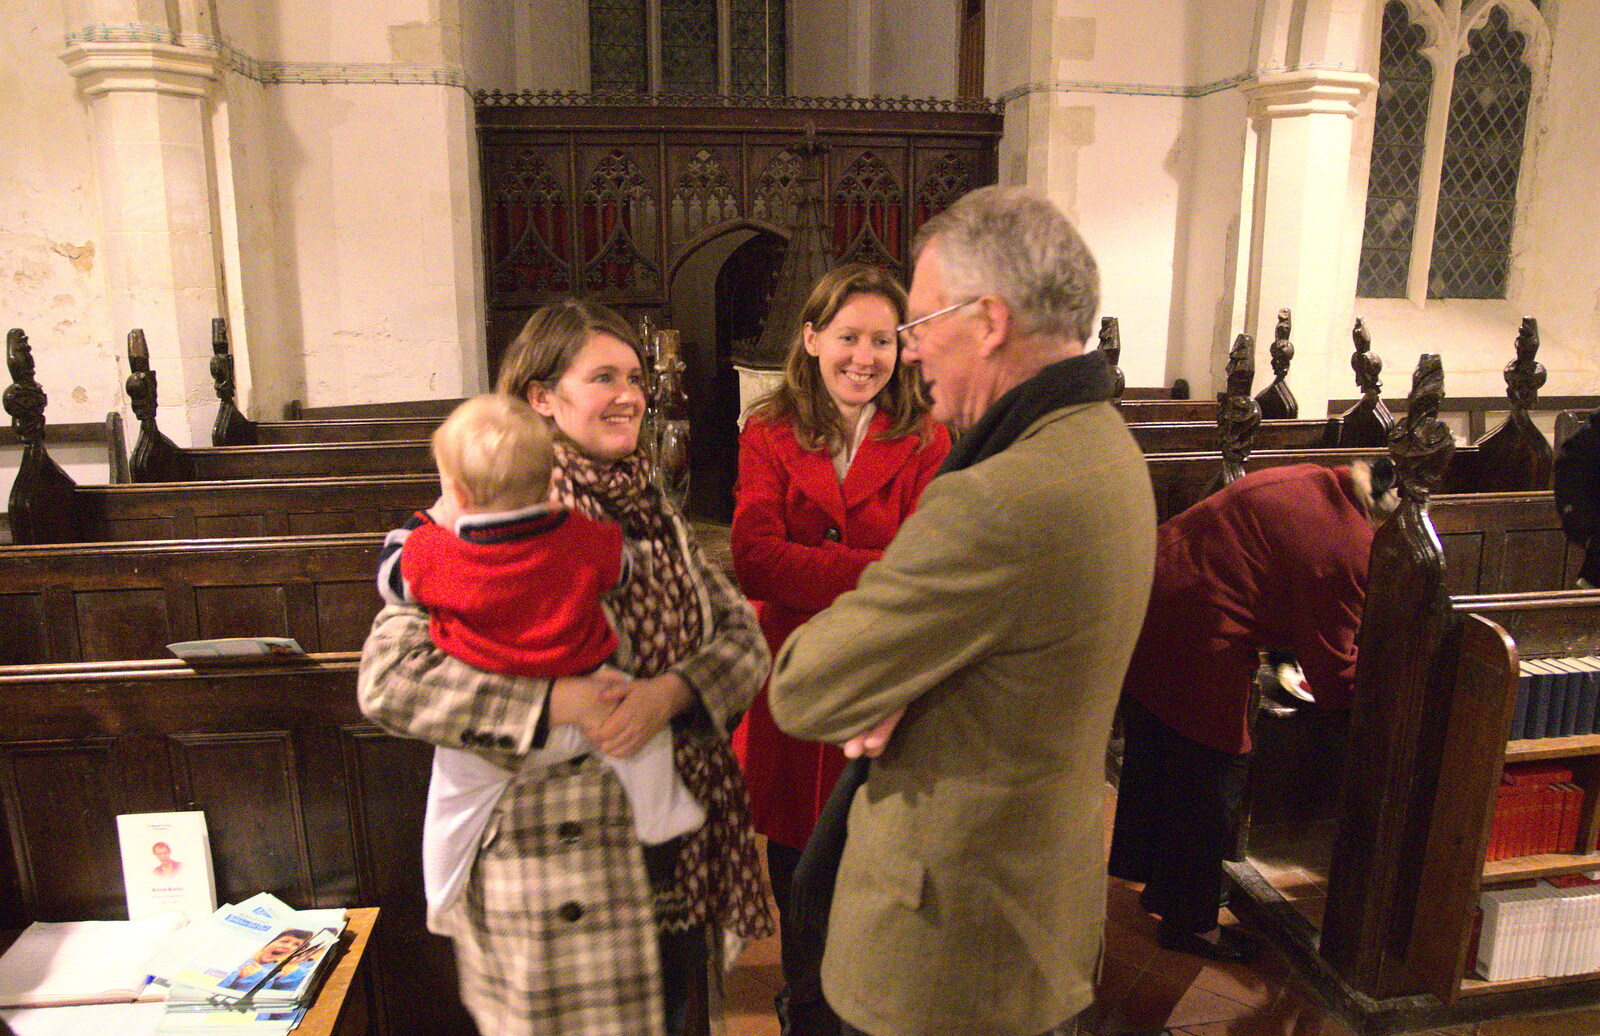 Isobel and Martina from The Thrandeston Carol Gig, St. Margaret of Antioch, Thrandeston, Suffolk - 18th December 2012